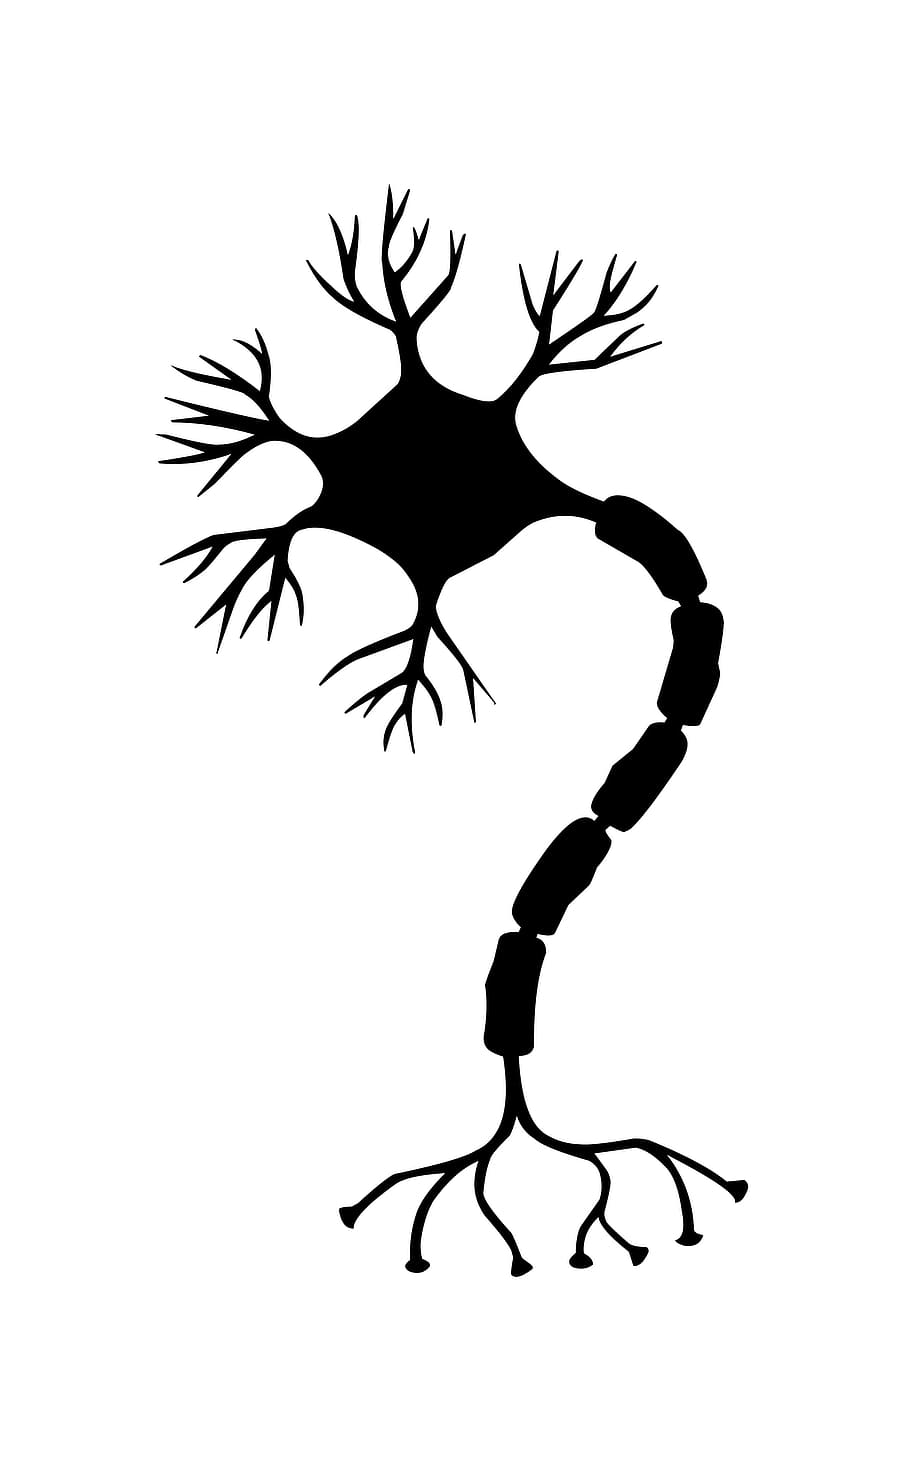 Illustration of a nerve cell., neuron, brain, neurons, nervous system